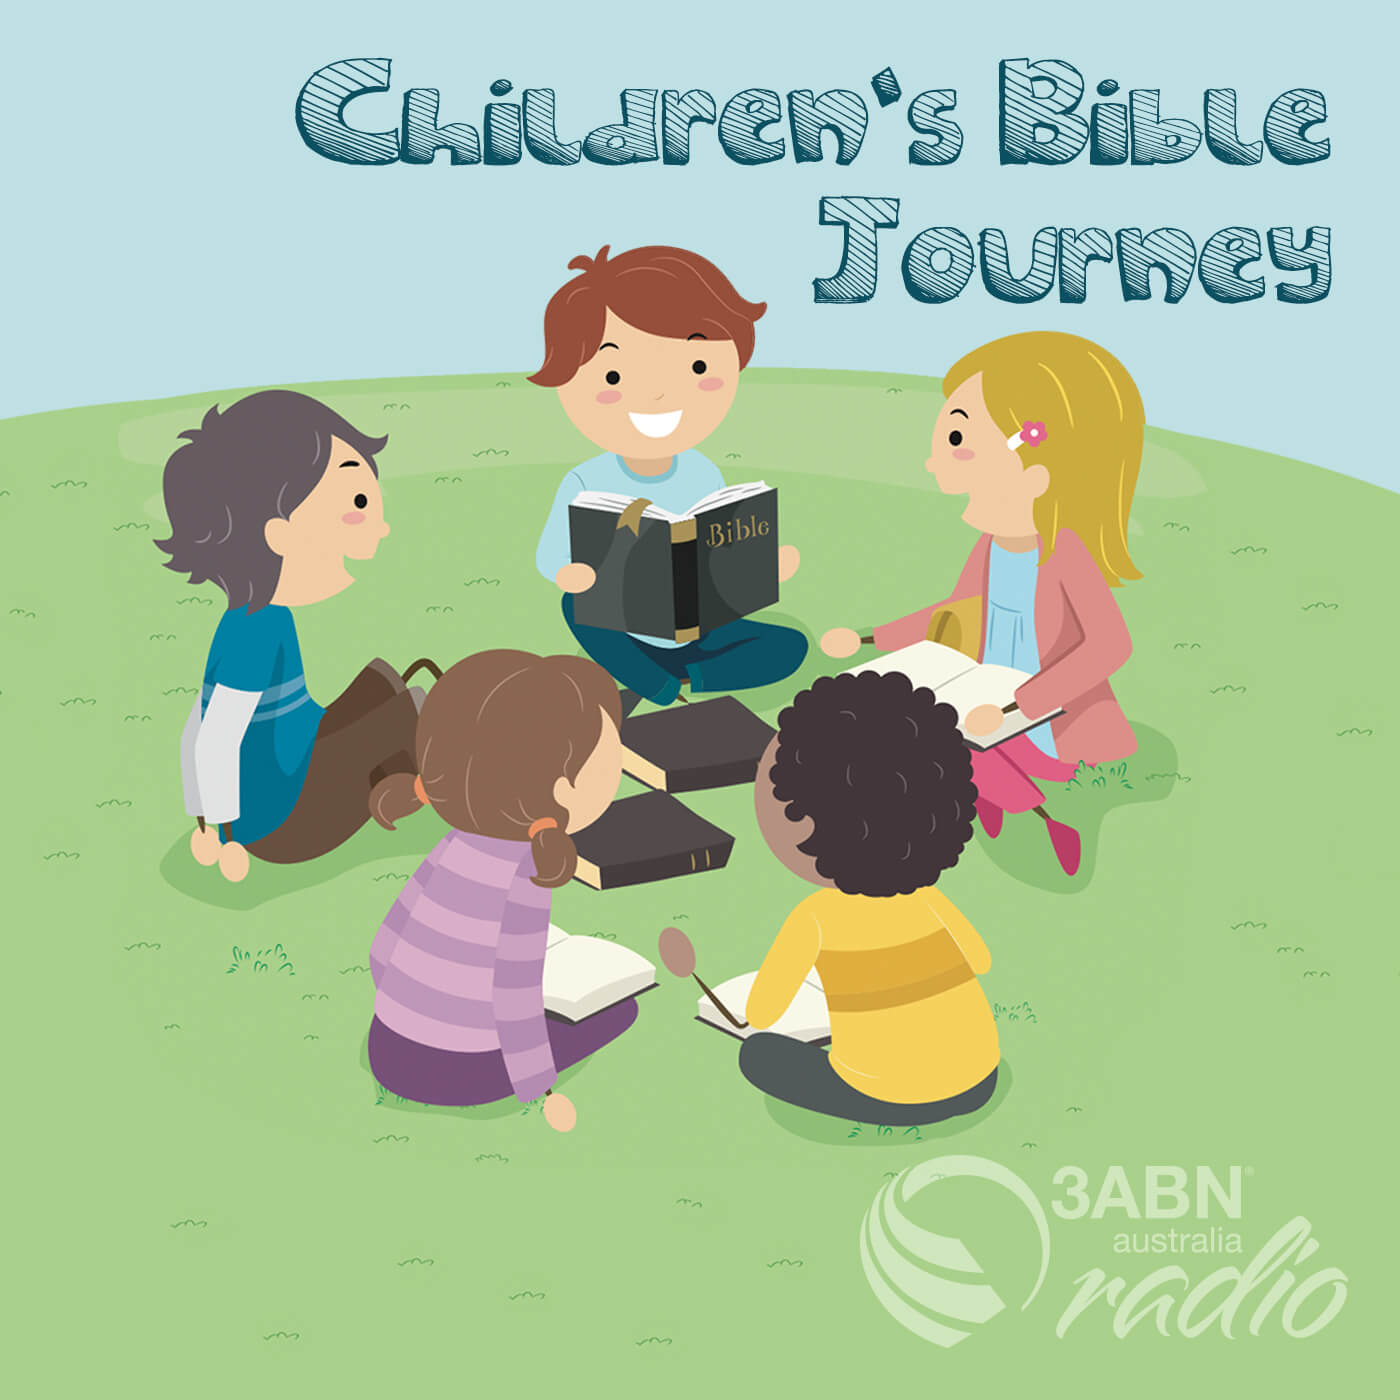 Children's Bible Journey - 2089